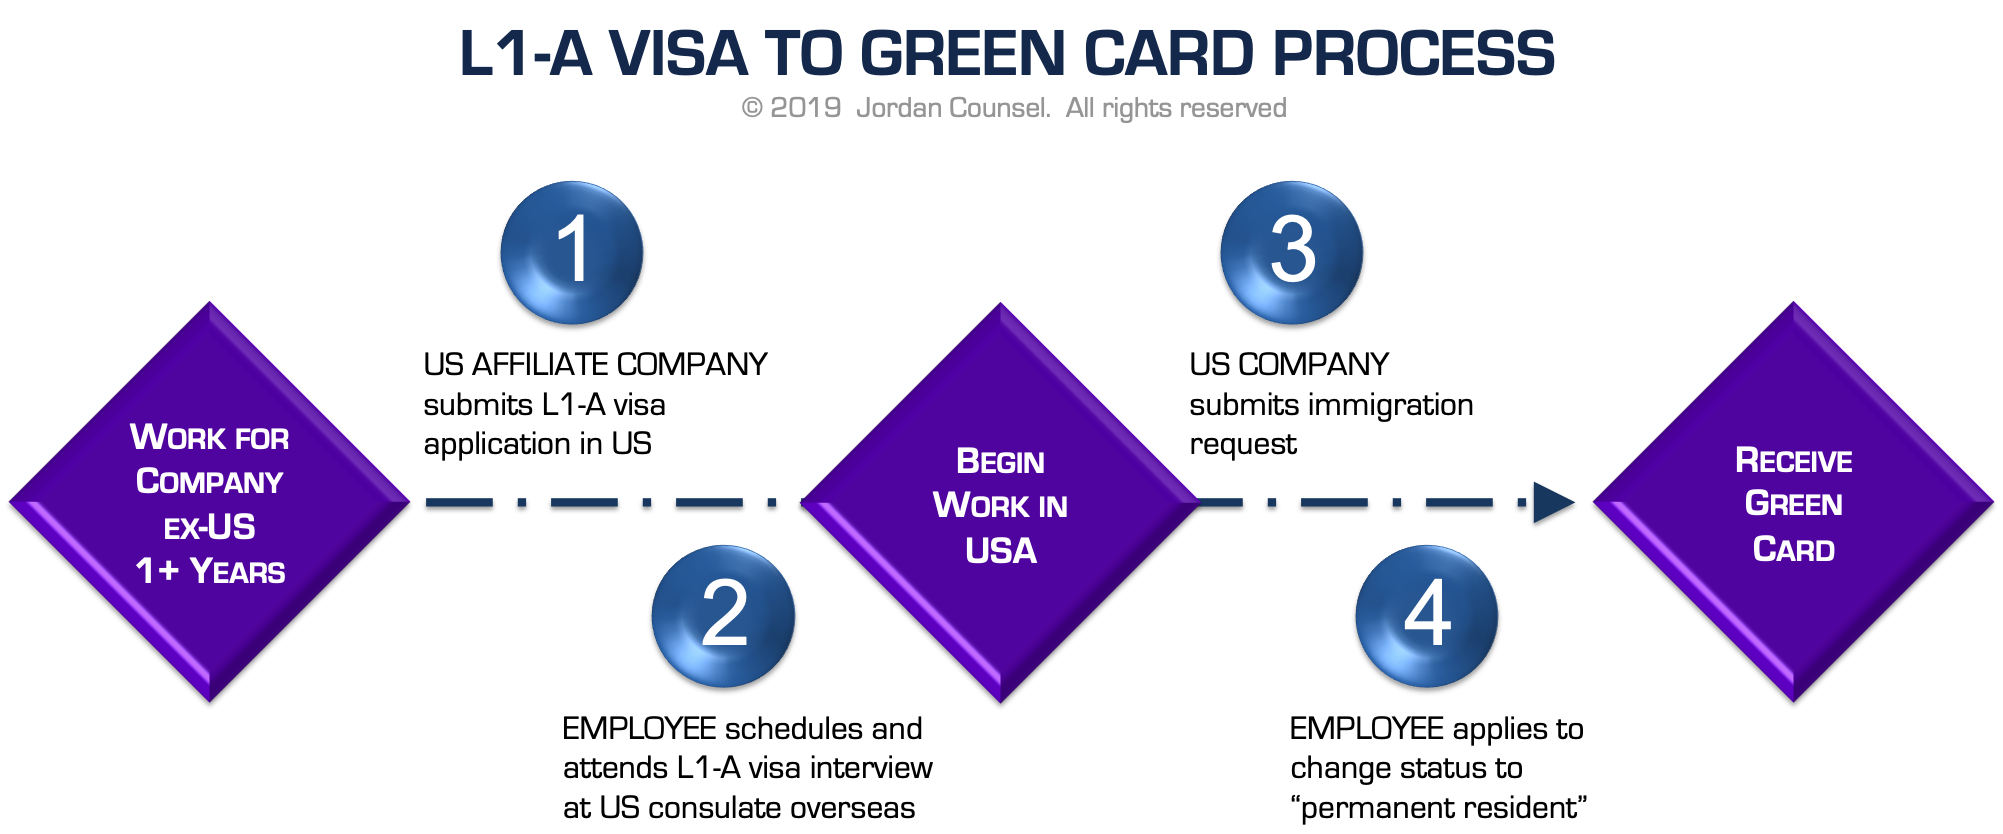 process visa photo tool